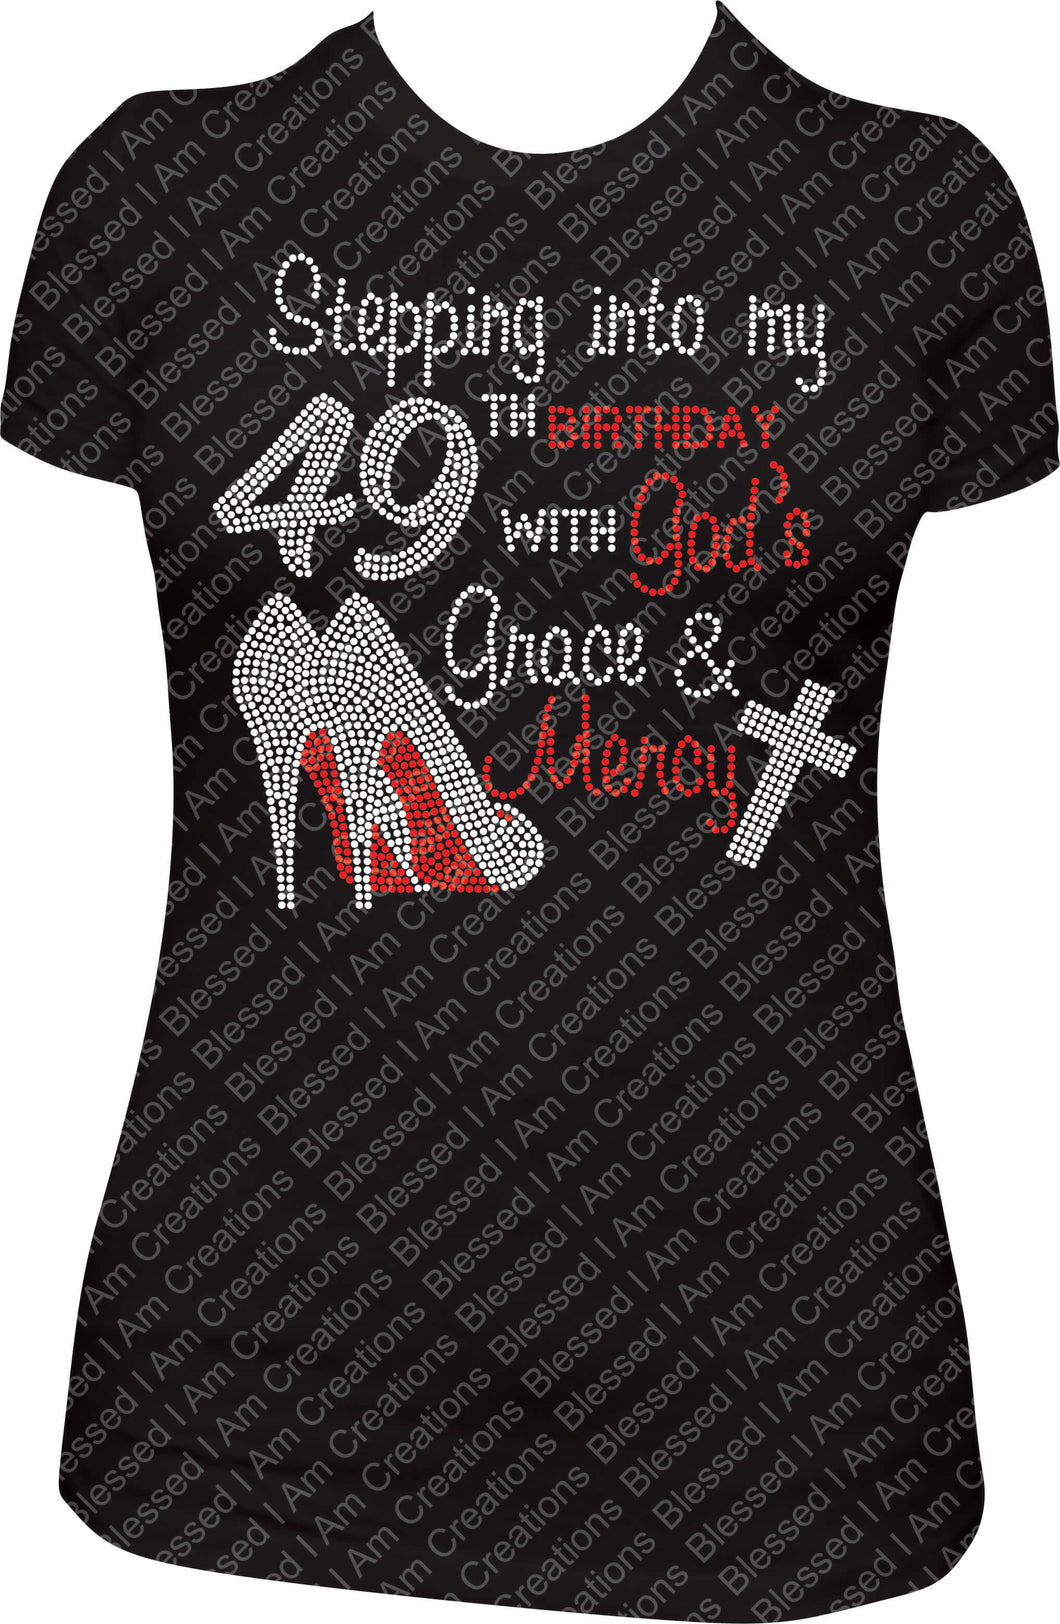 Stepping into my 49th Birthday with God's Grace and Mercy Rhinestone Birthday Shirt